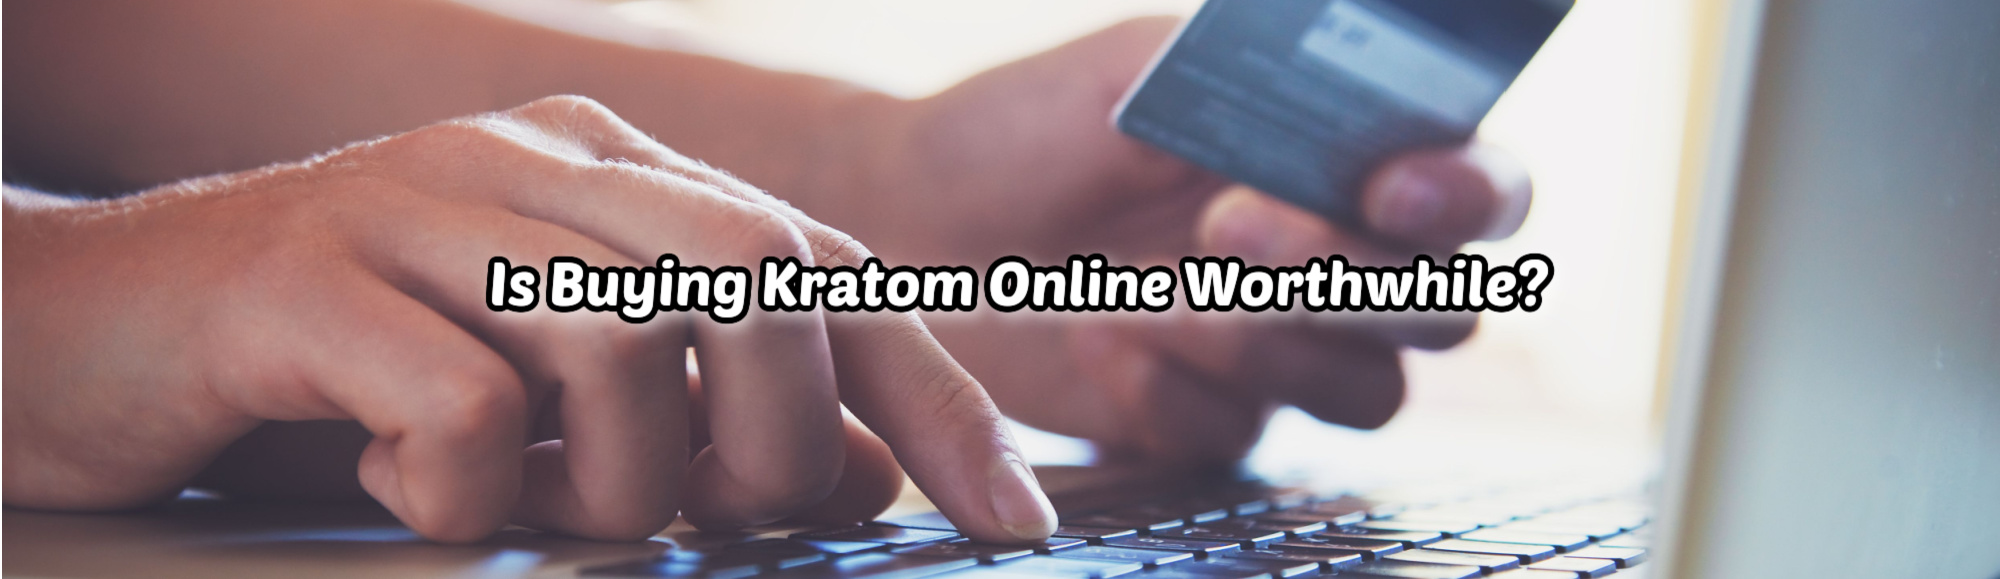 image of is buying kratom online worthwhile